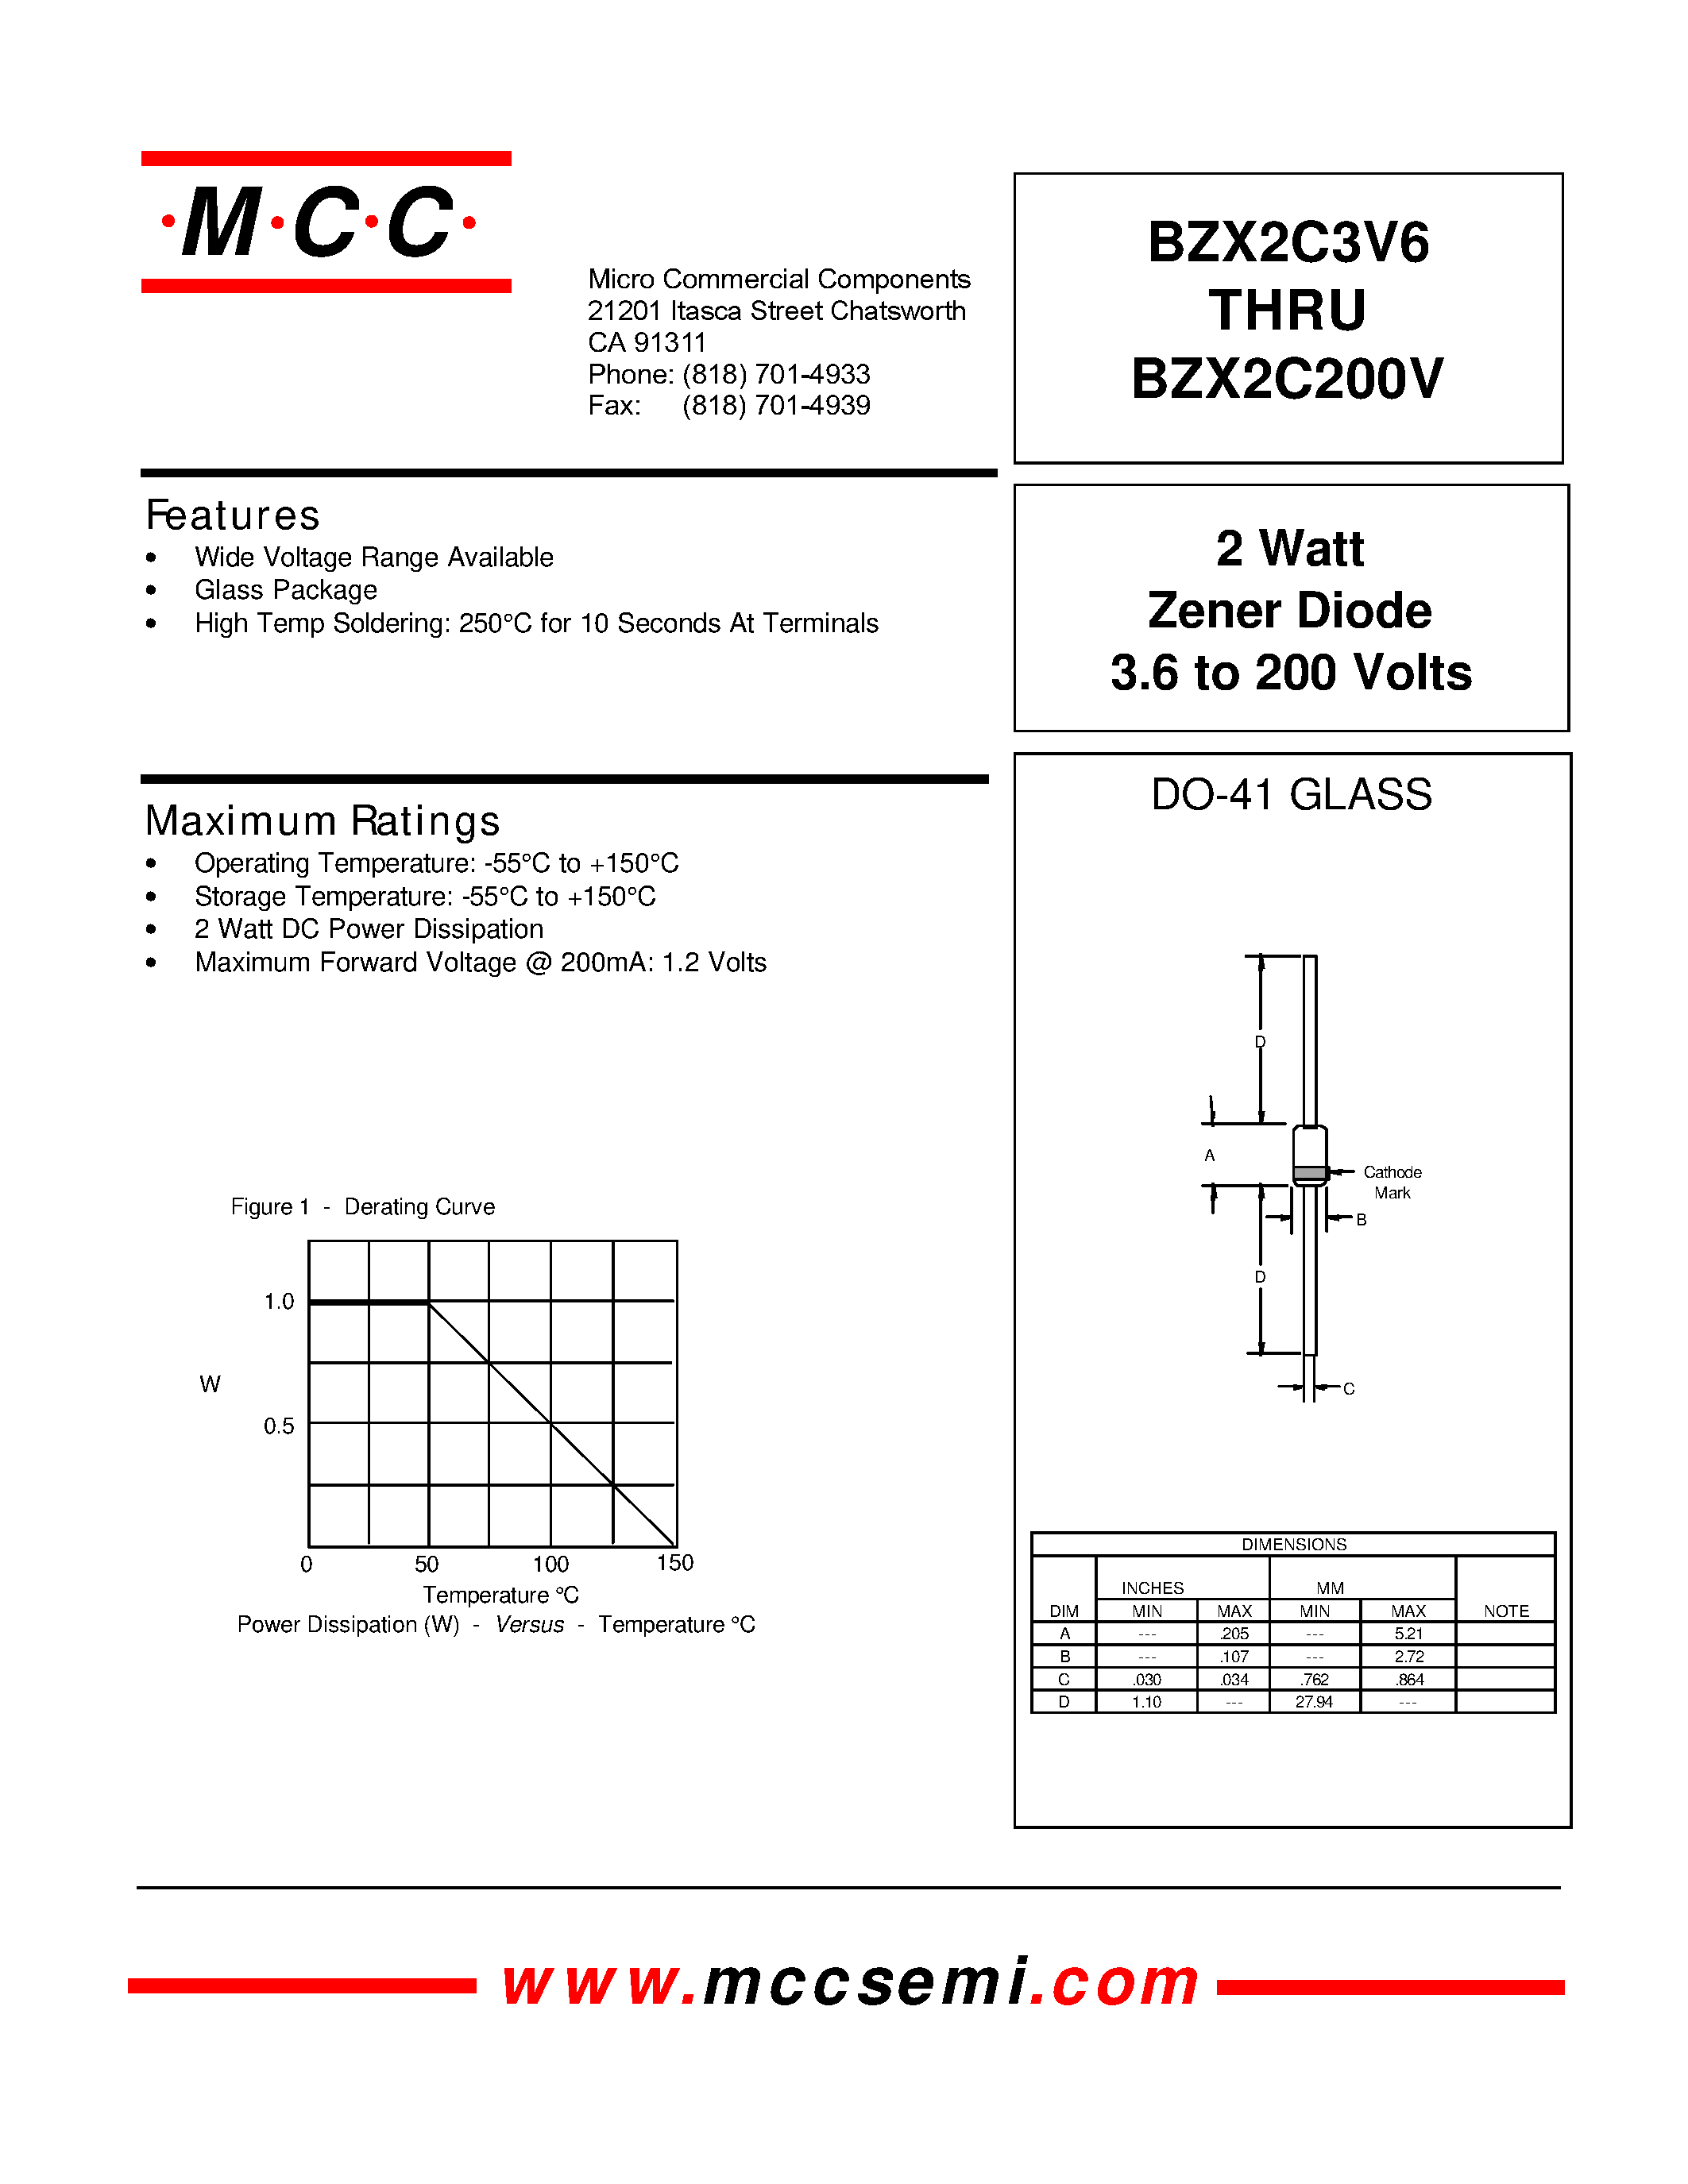 Даташит BZX2C68V - 2 Watt Zener Diode 3.6 to 200 Volts страница 1